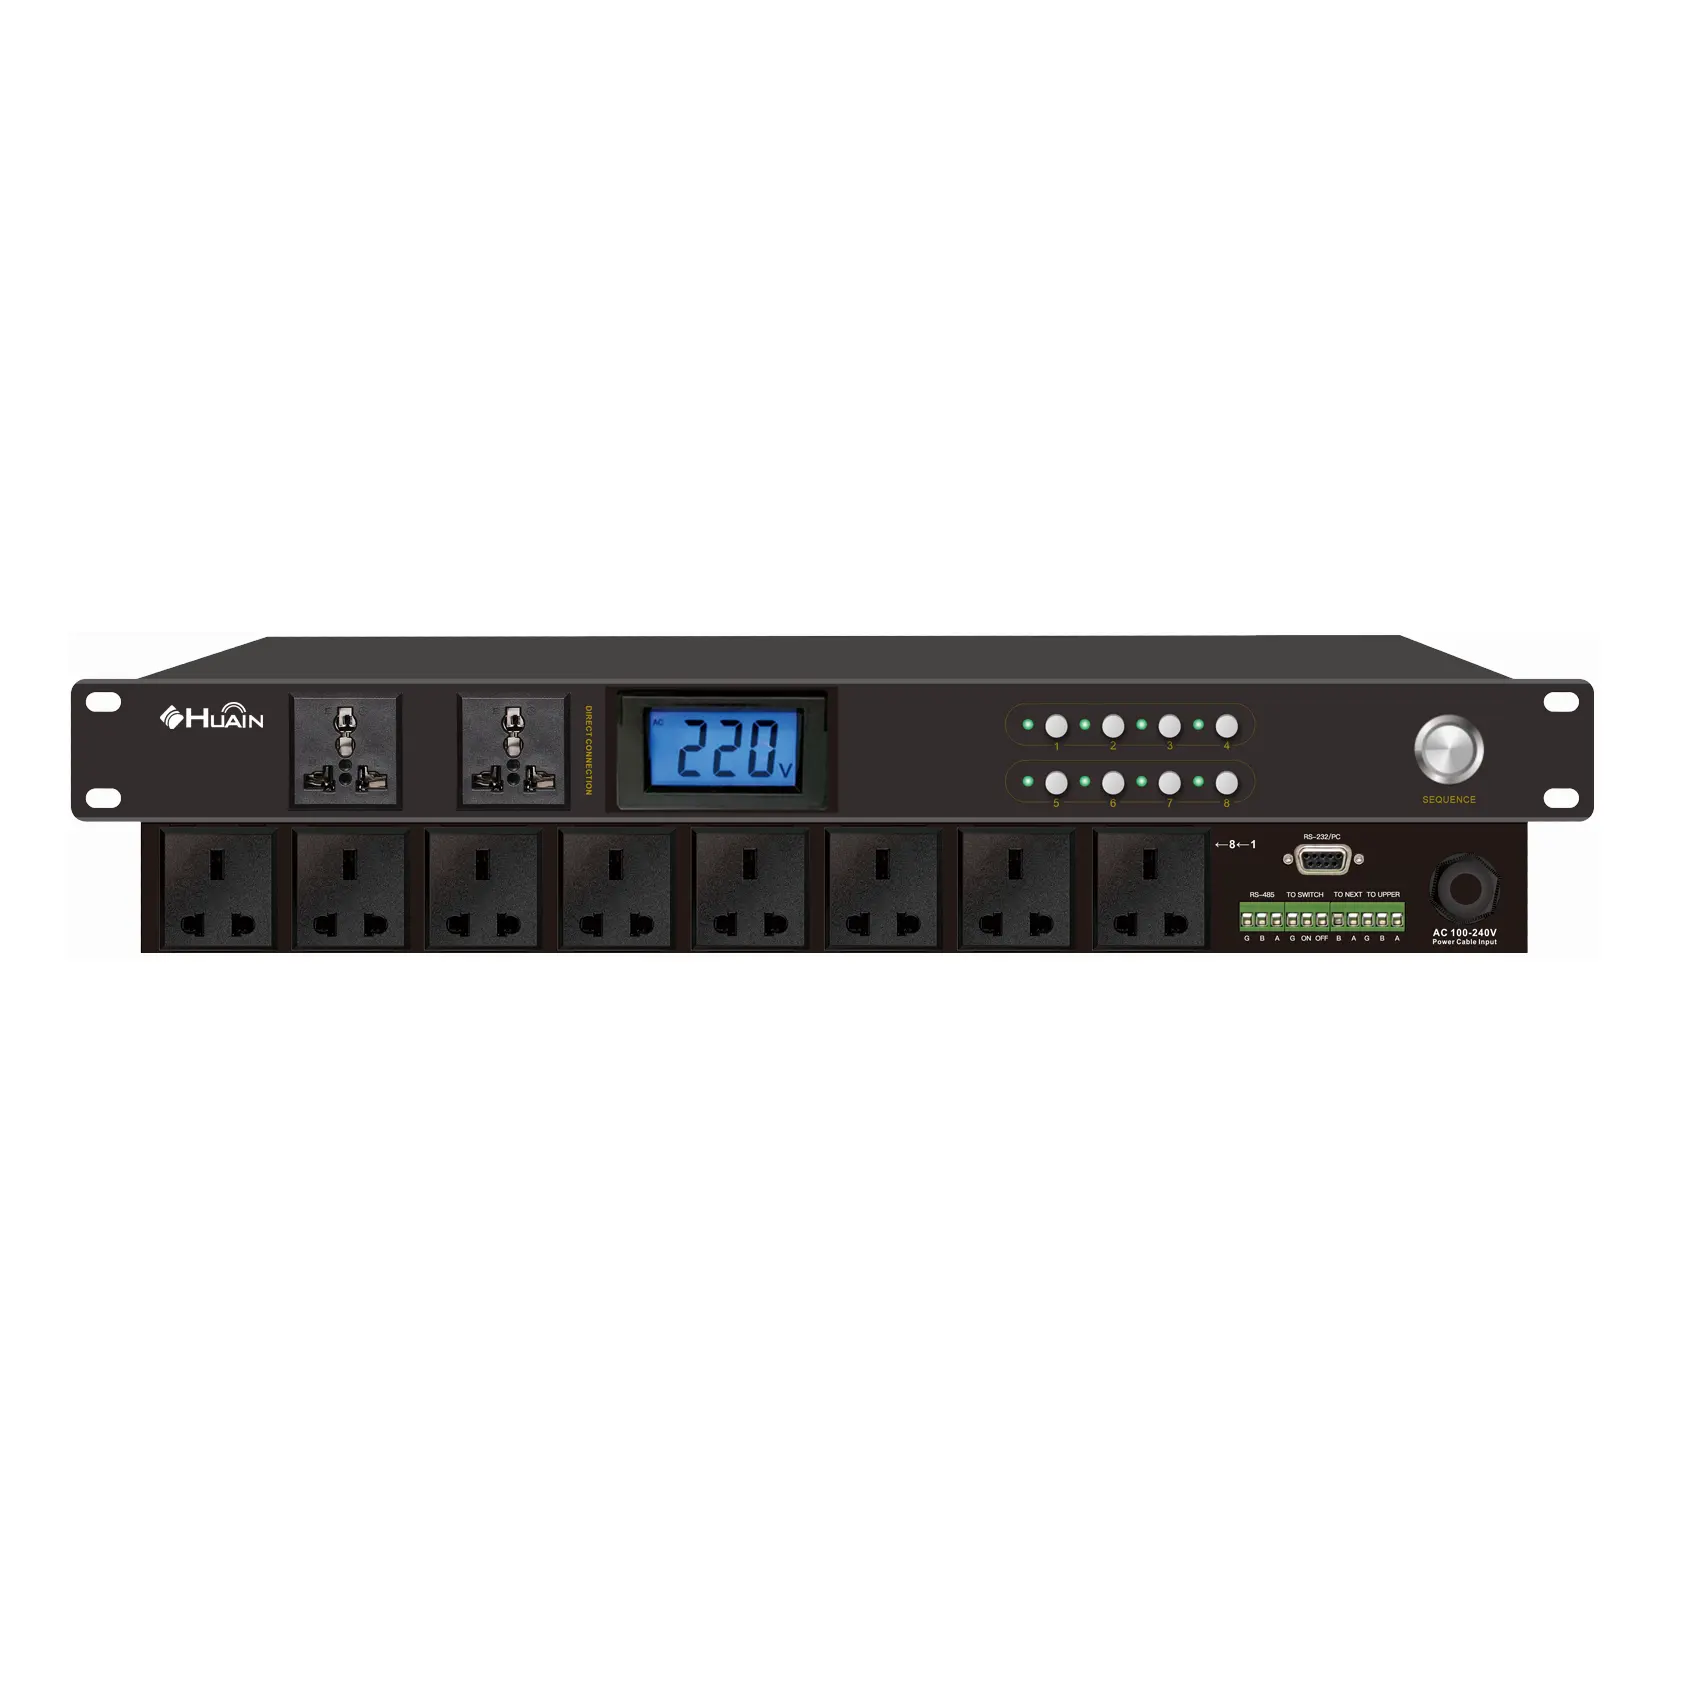 Outlet Power Sequencer Conditioner Rack Mount Pro Audio Digital Power Supply Controller Regulator